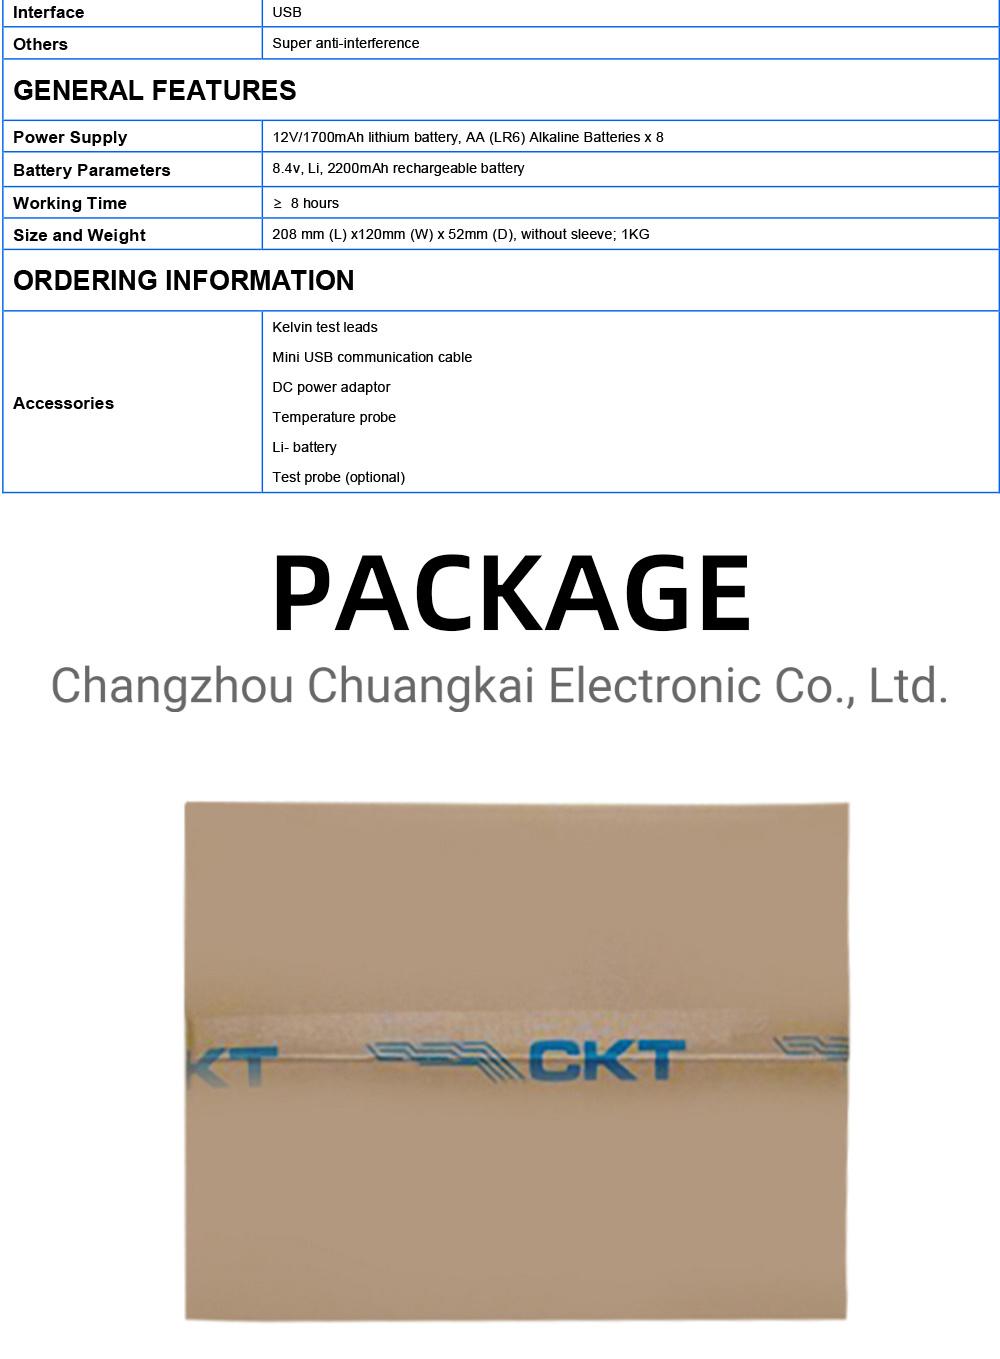 Ckt3554b Power Battery Meter Handheld Device Universal Battery Tester